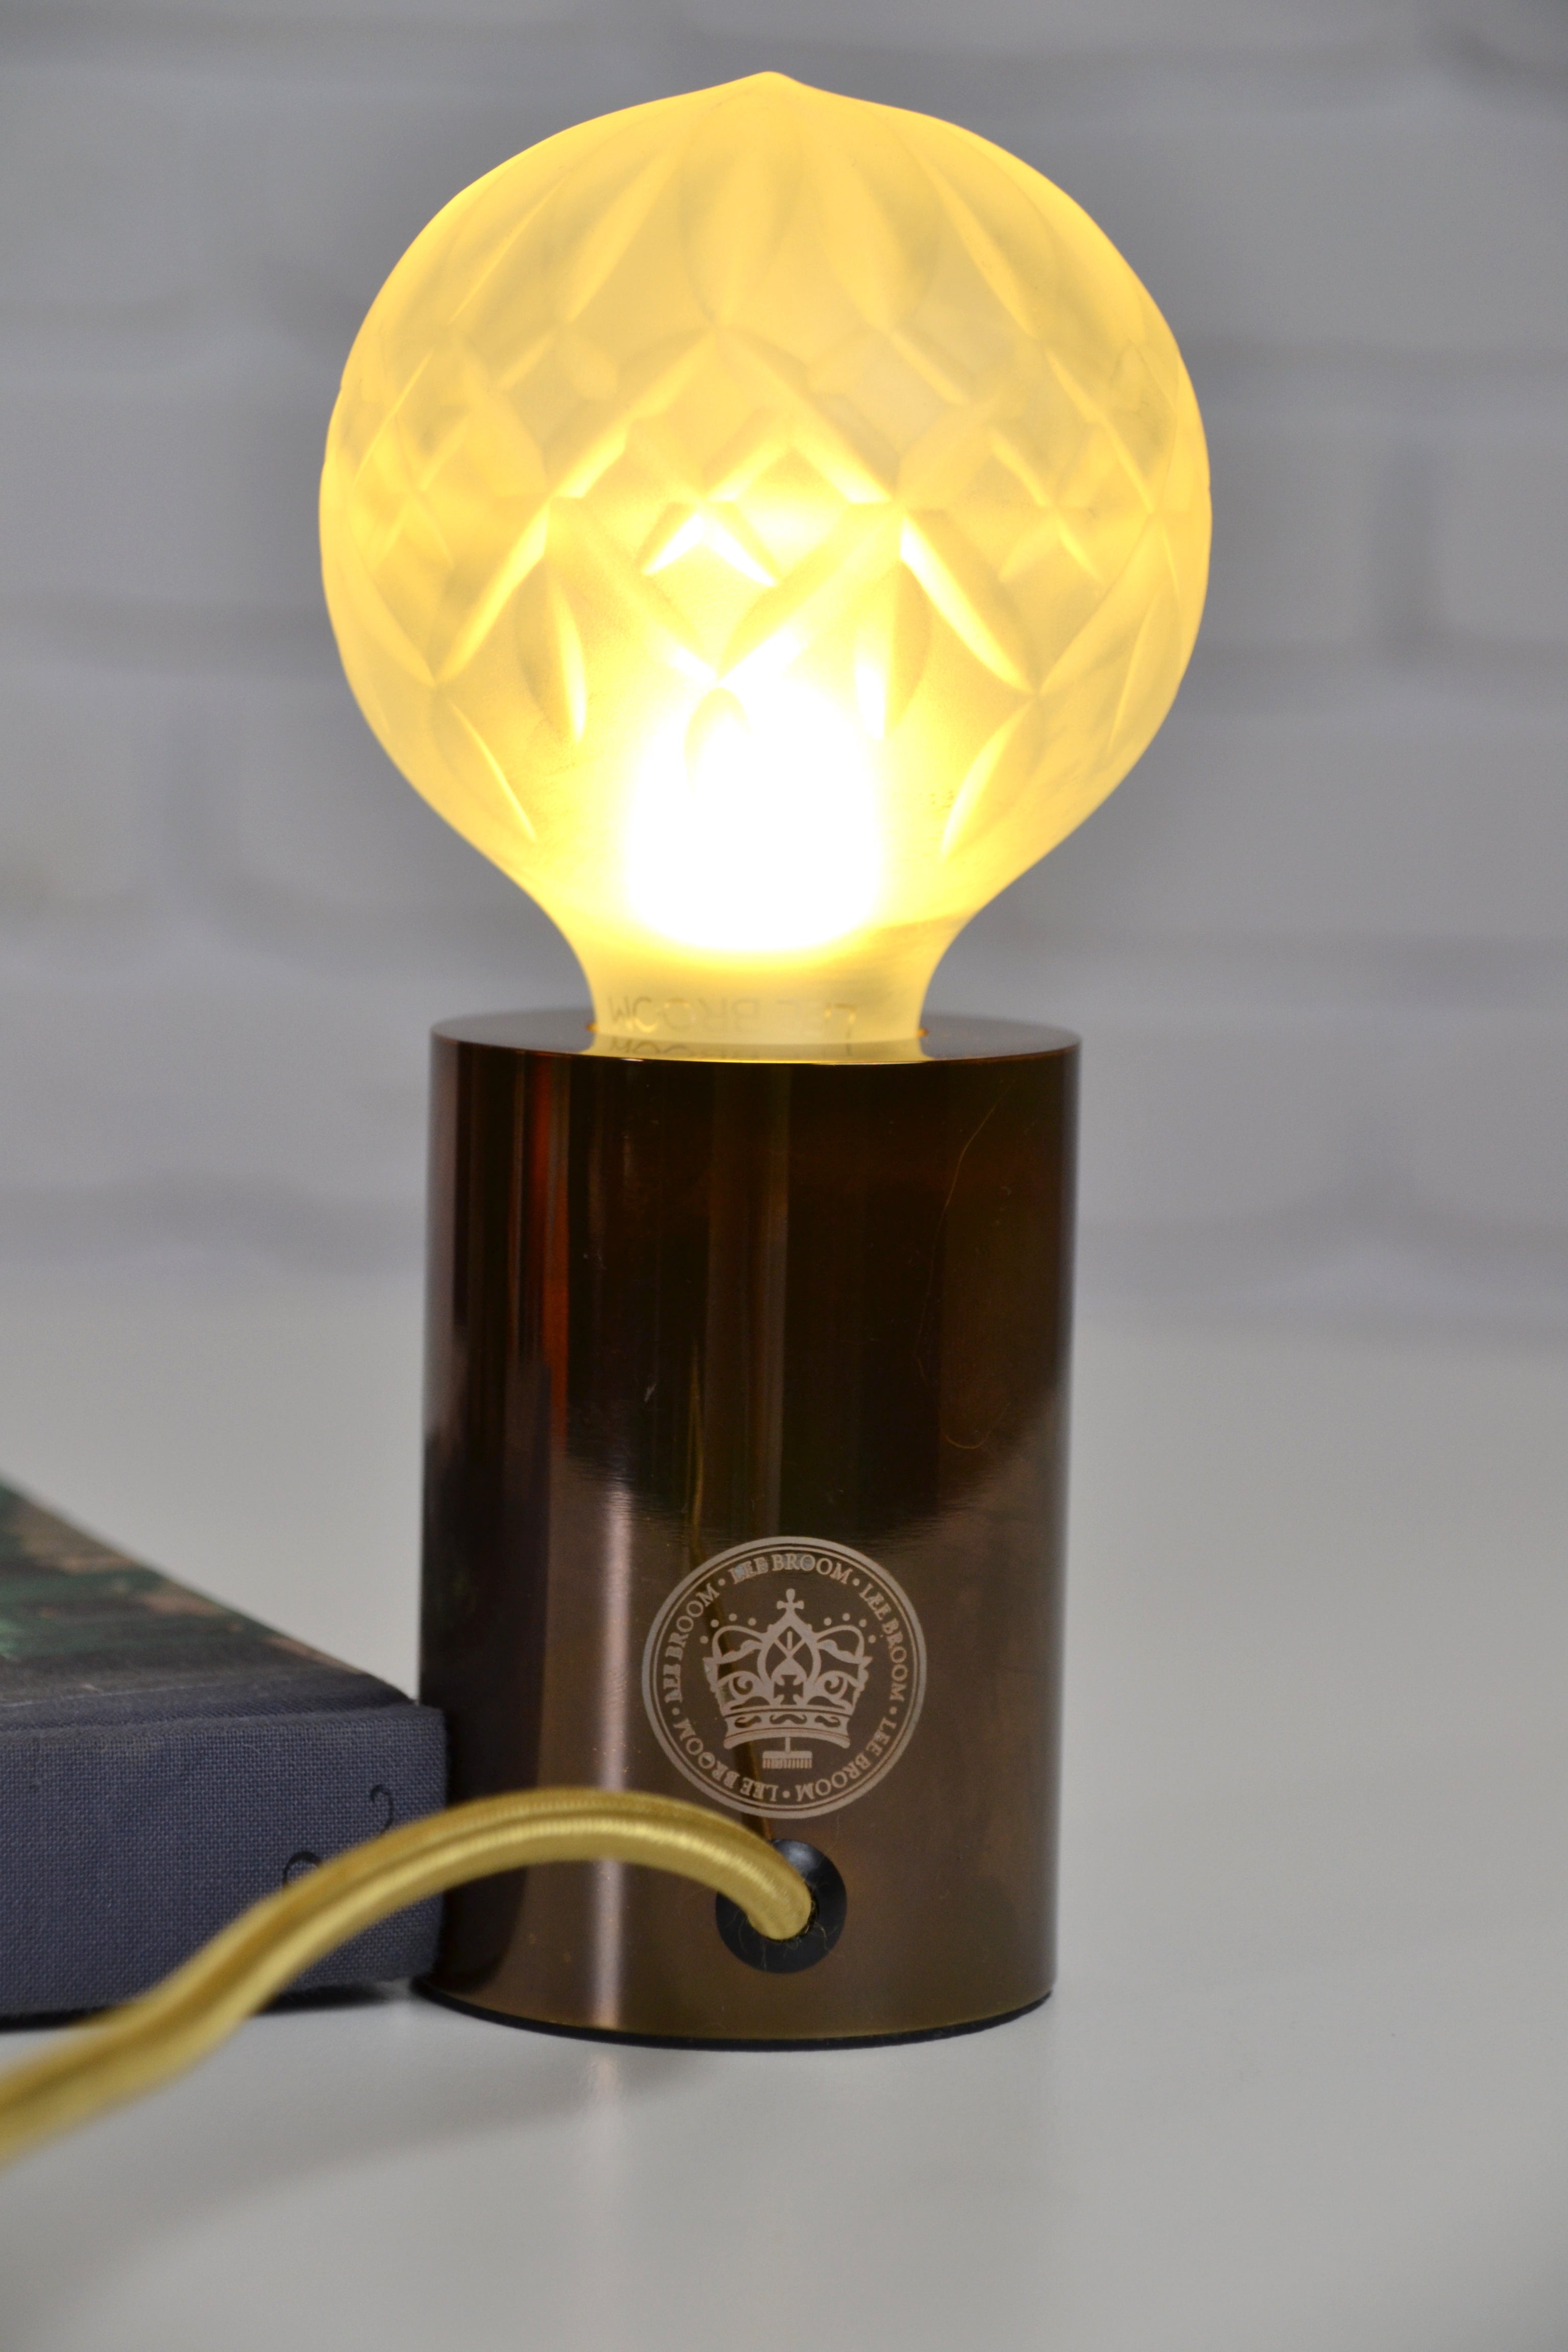 Modern designer crystal bulb table lamps by Lee Broom UK